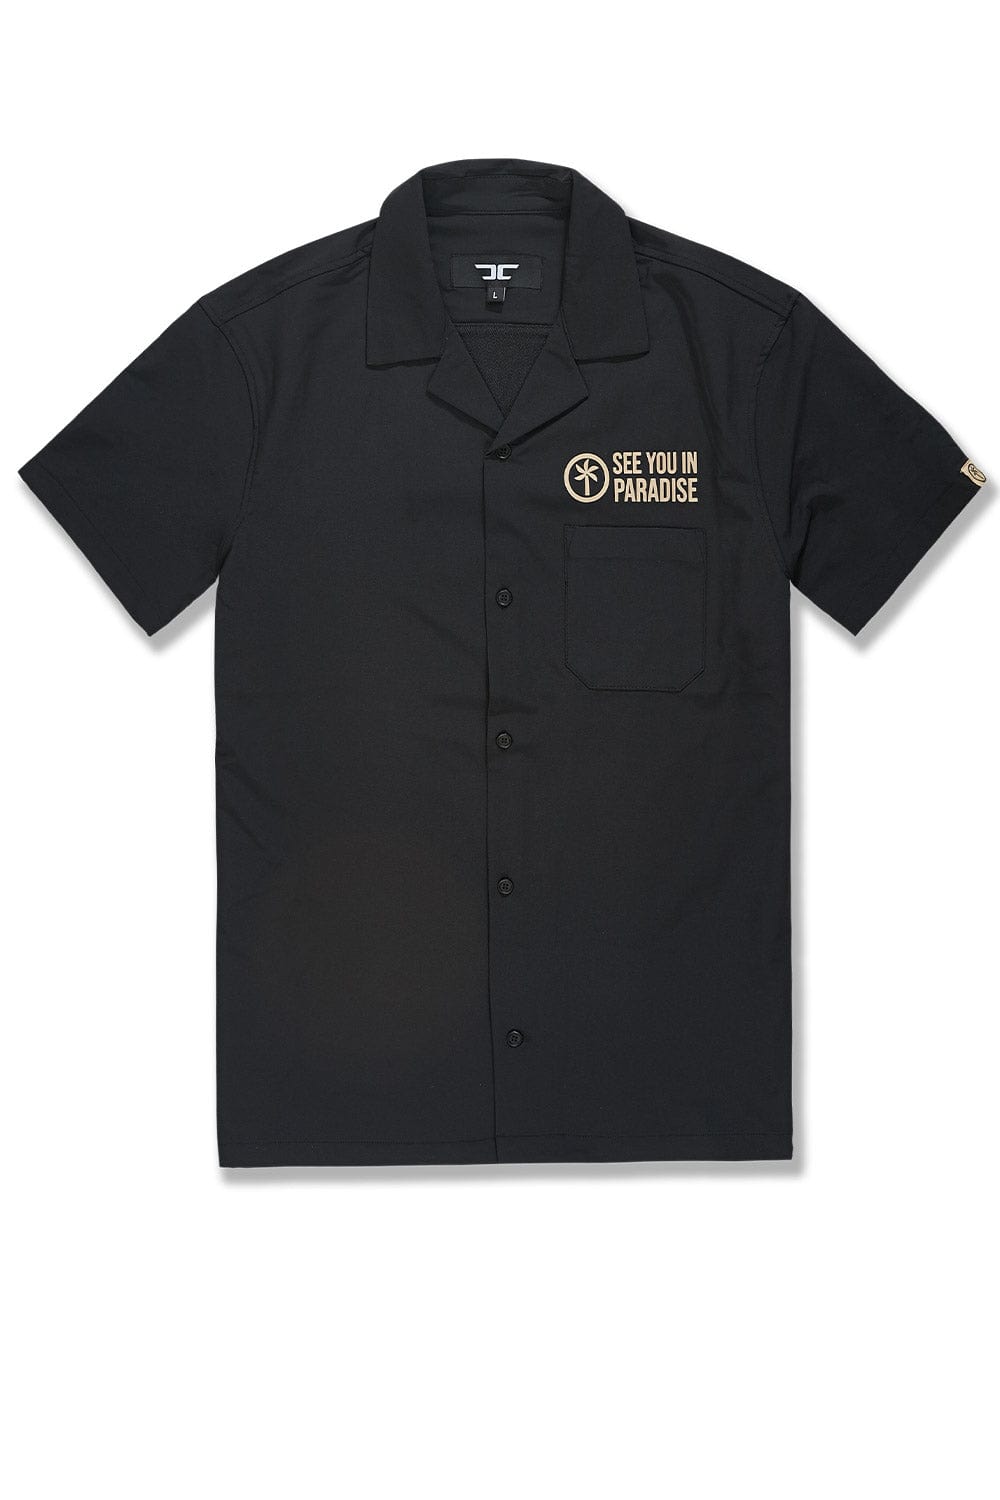 Jordan Craig Bay Area Mechanic S/S Shirt (Black) S / Black